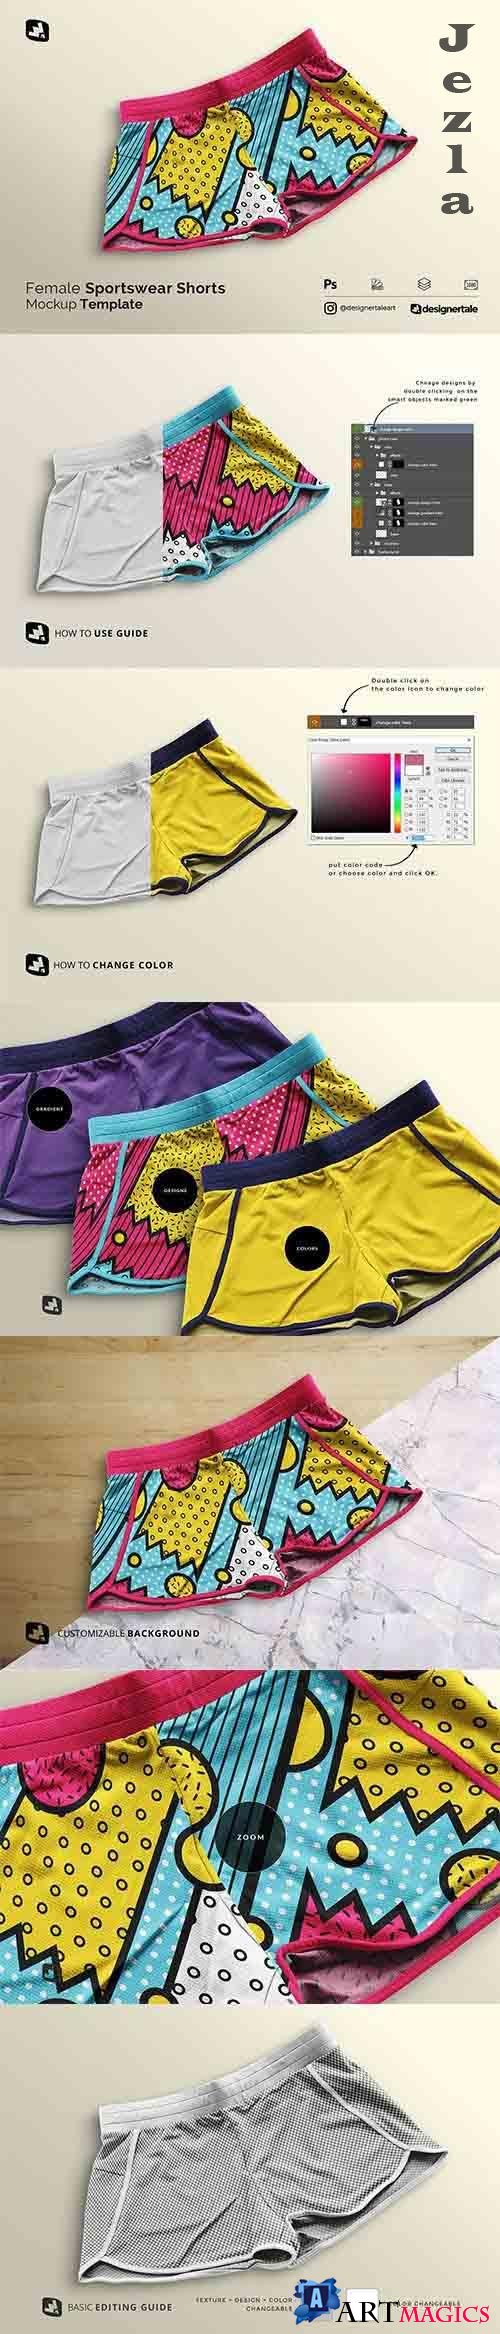 CreativeMarket - Female Sportswear Shorts Mockup 5357877